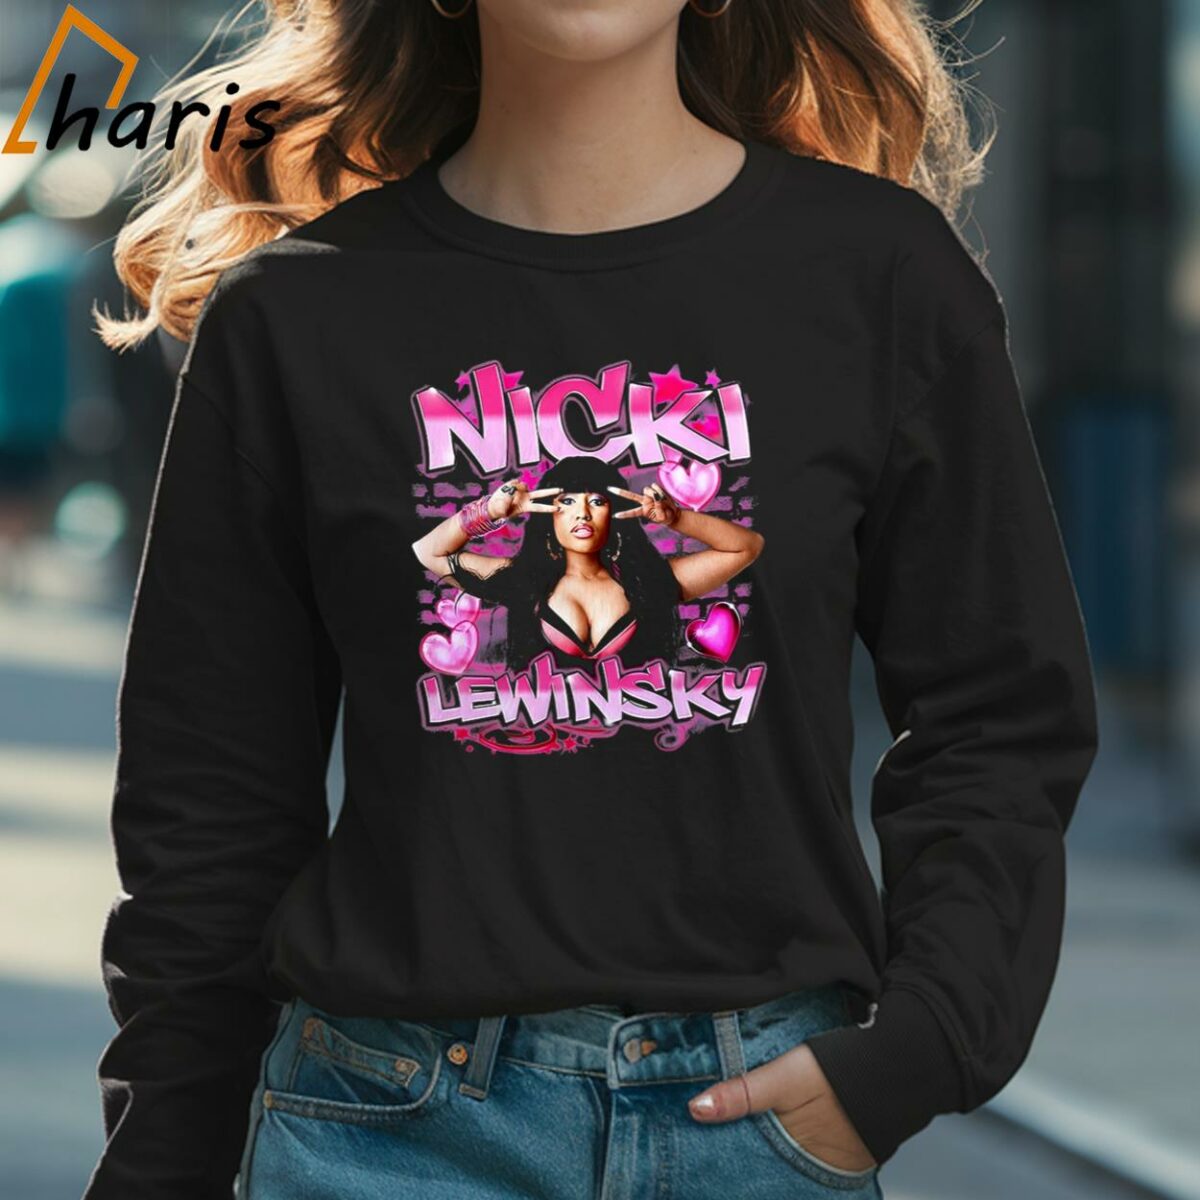 Nicki Minaj Lewinsky Rapper Homage Graphic Shirt 3 Long sleeve shirt